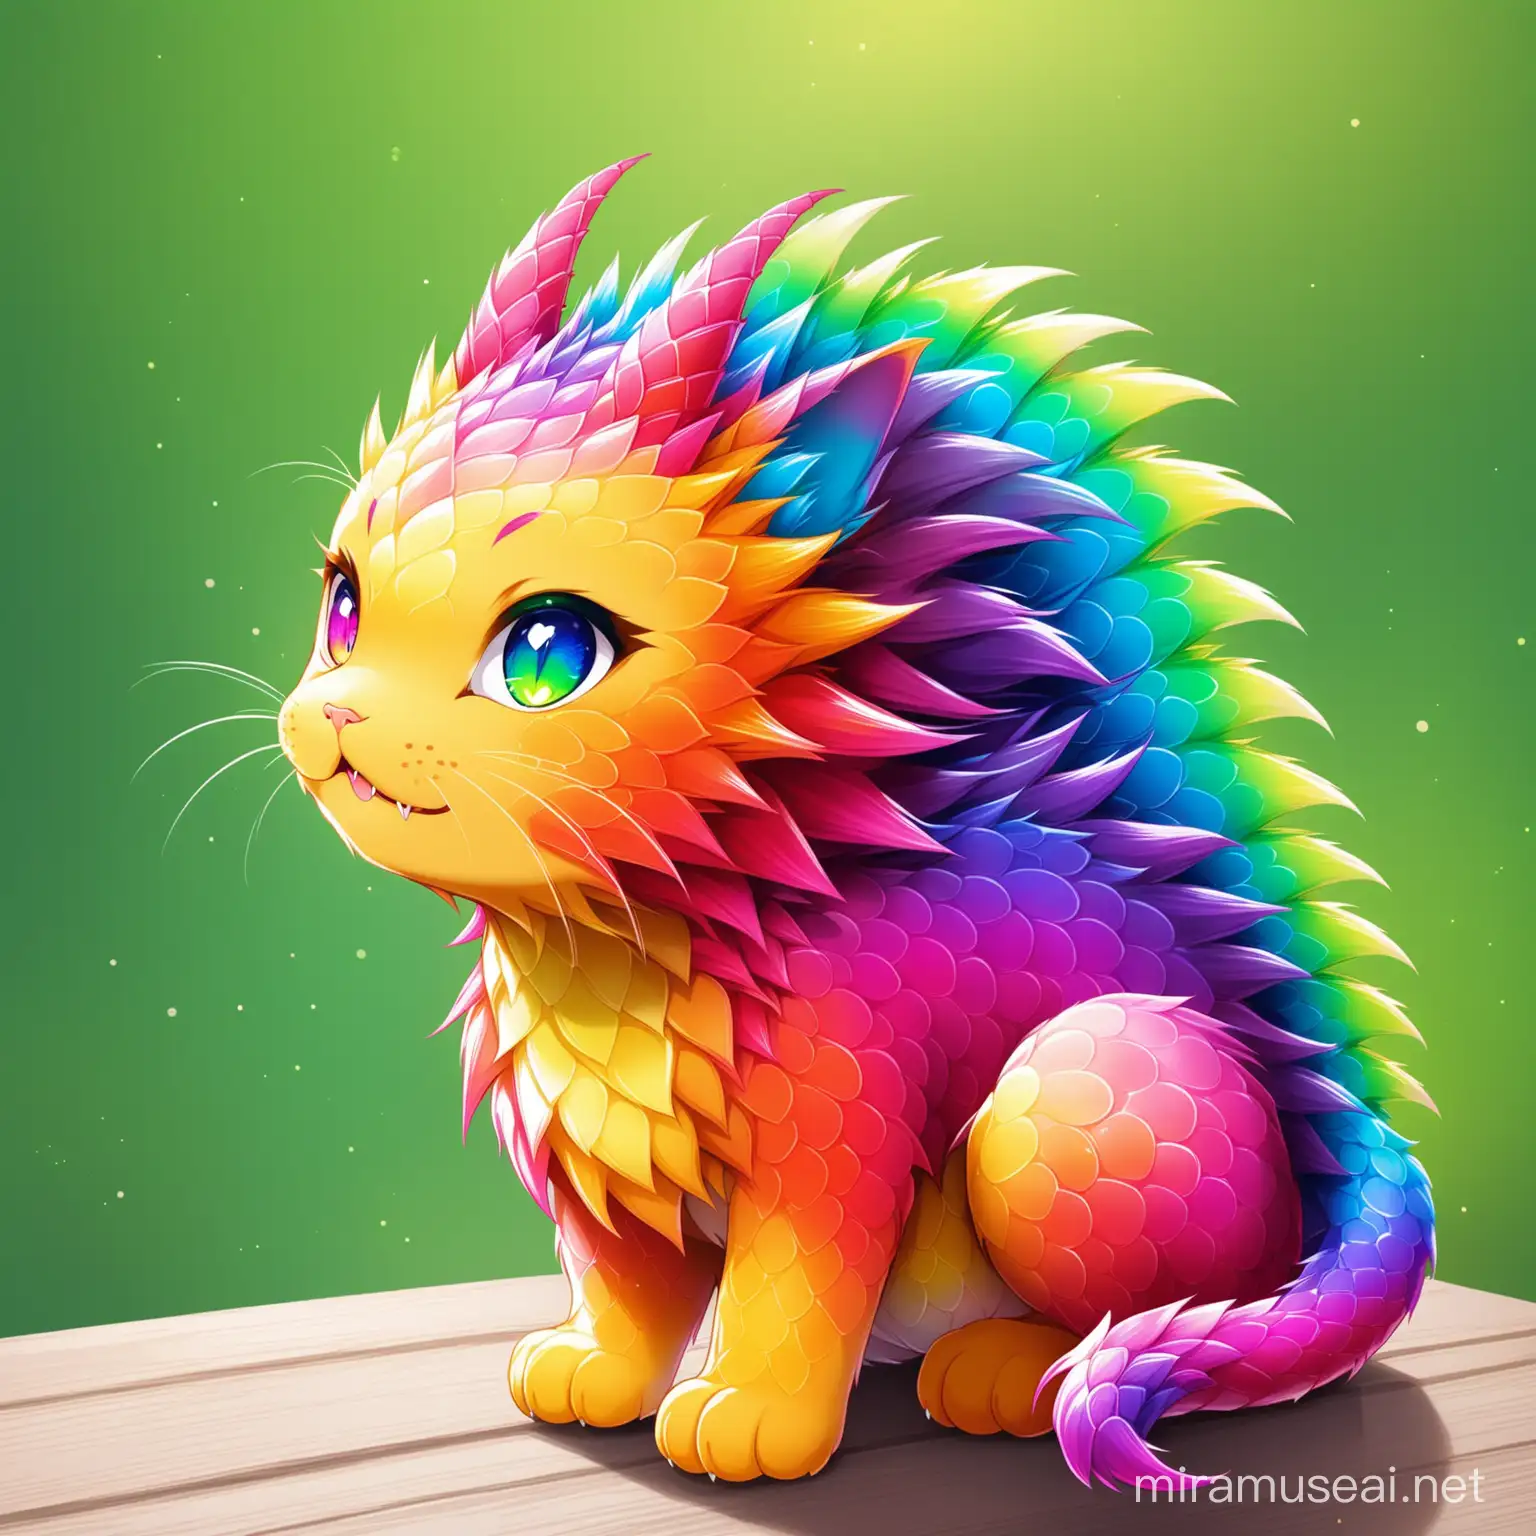 RainbowHued DragonLike Feline in Fantasy Realm